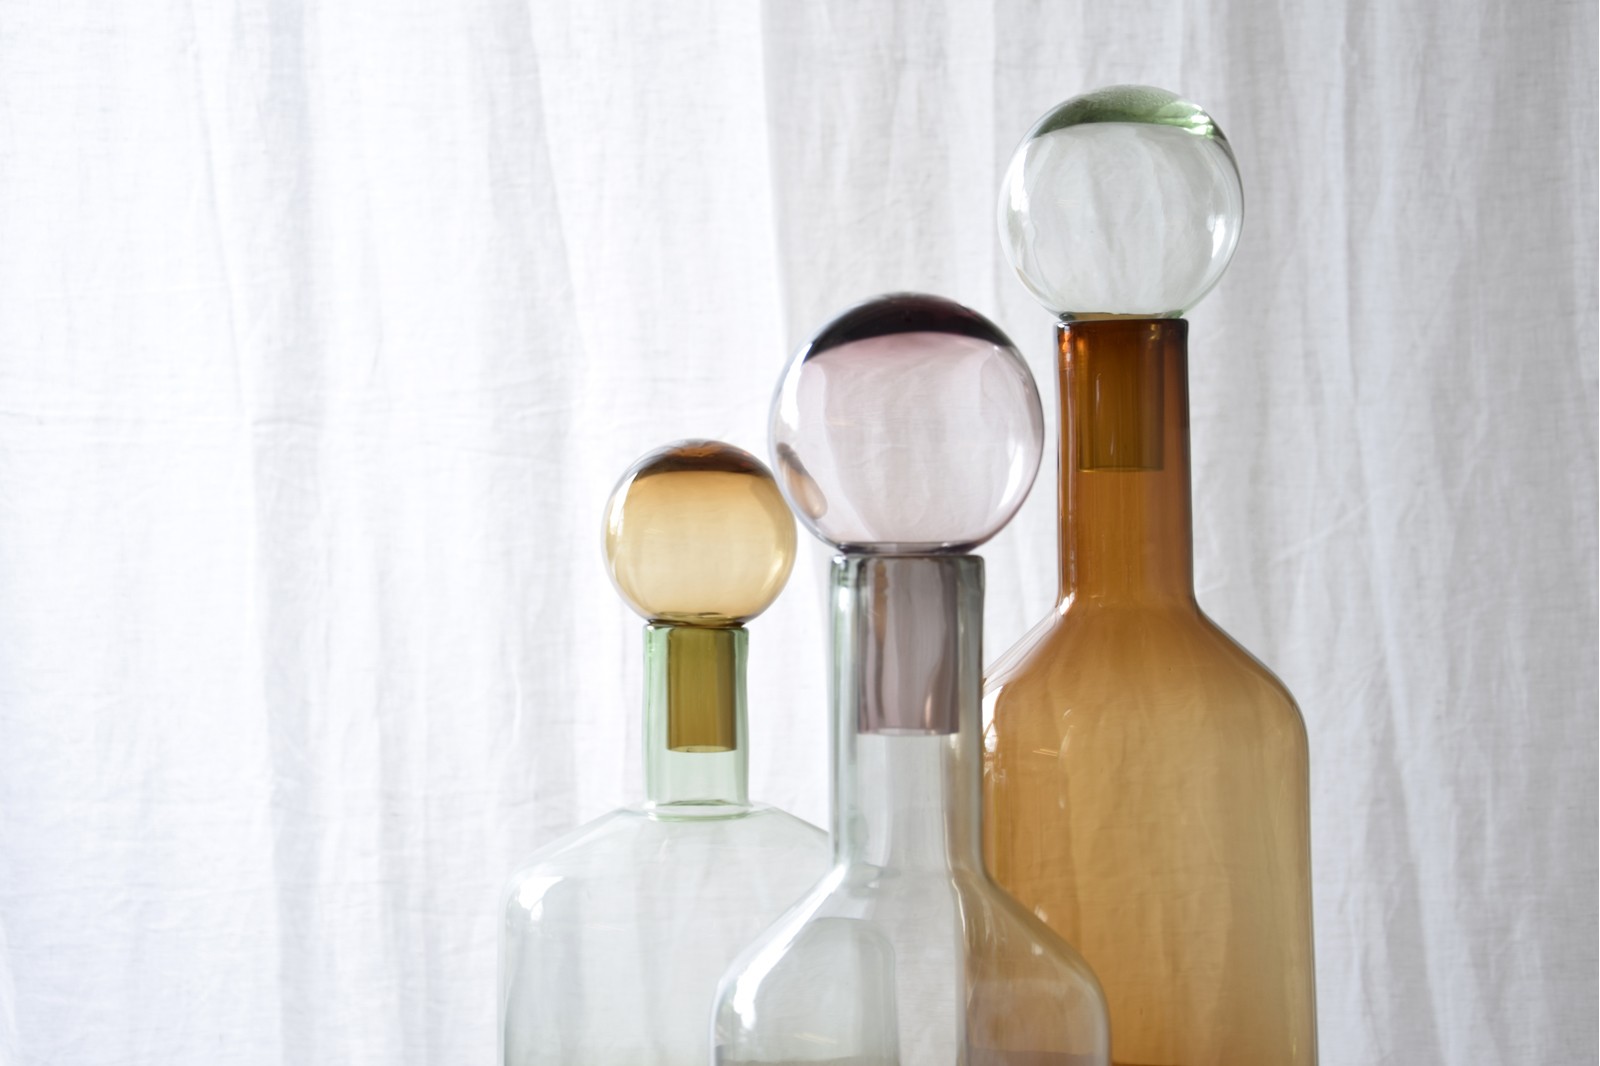 BOTTLE COLLECTION I : COLOURED GLASS BOTTLES